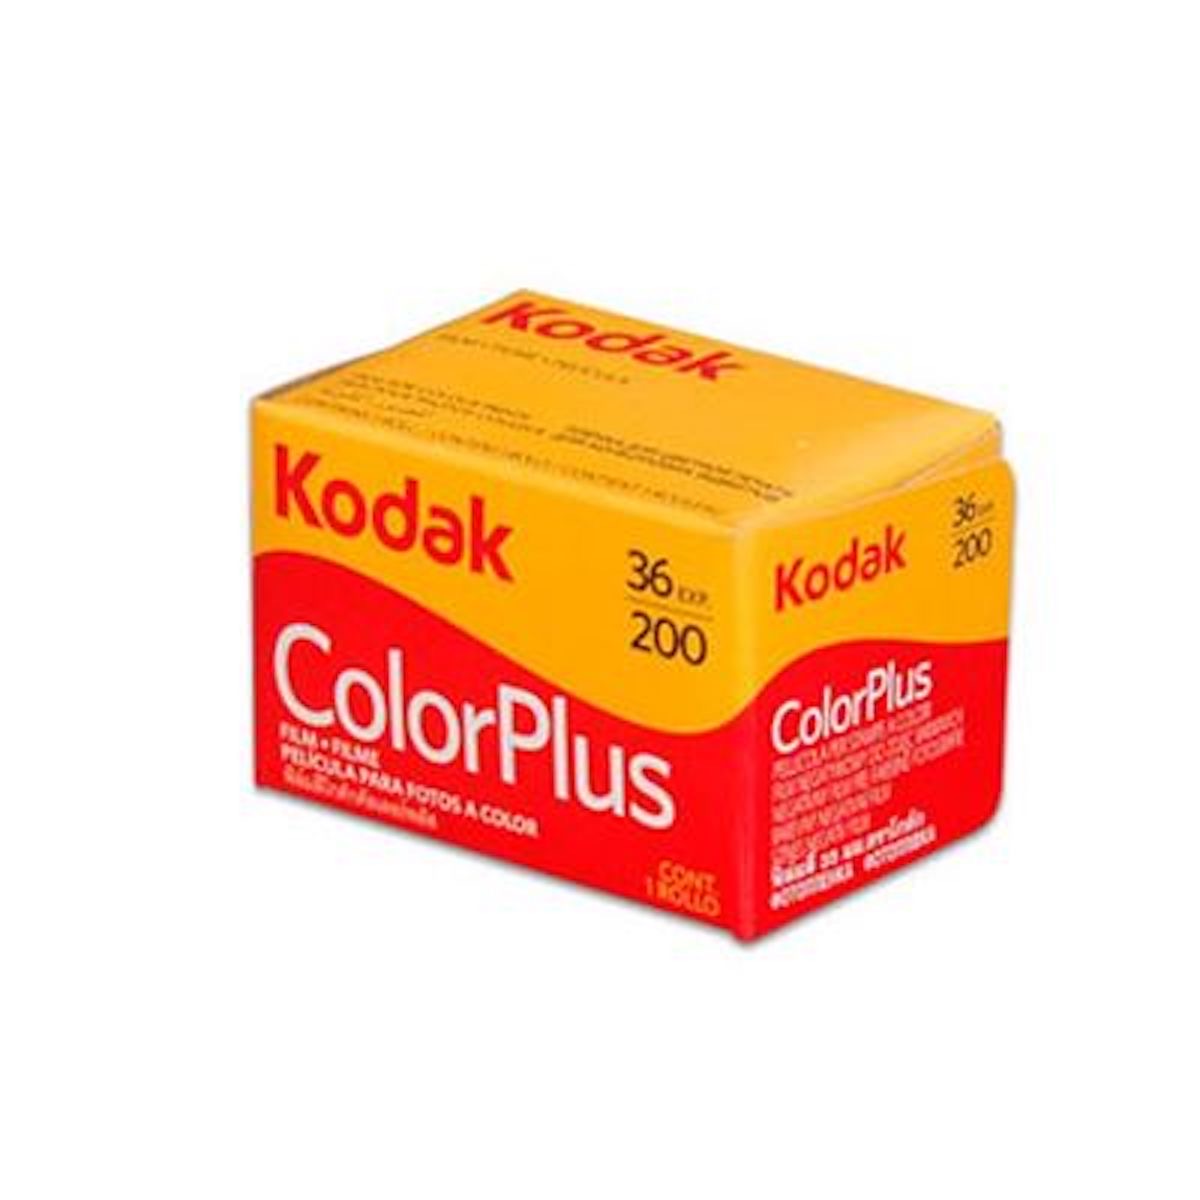 Kodak Colorplus 200 135/36 Film